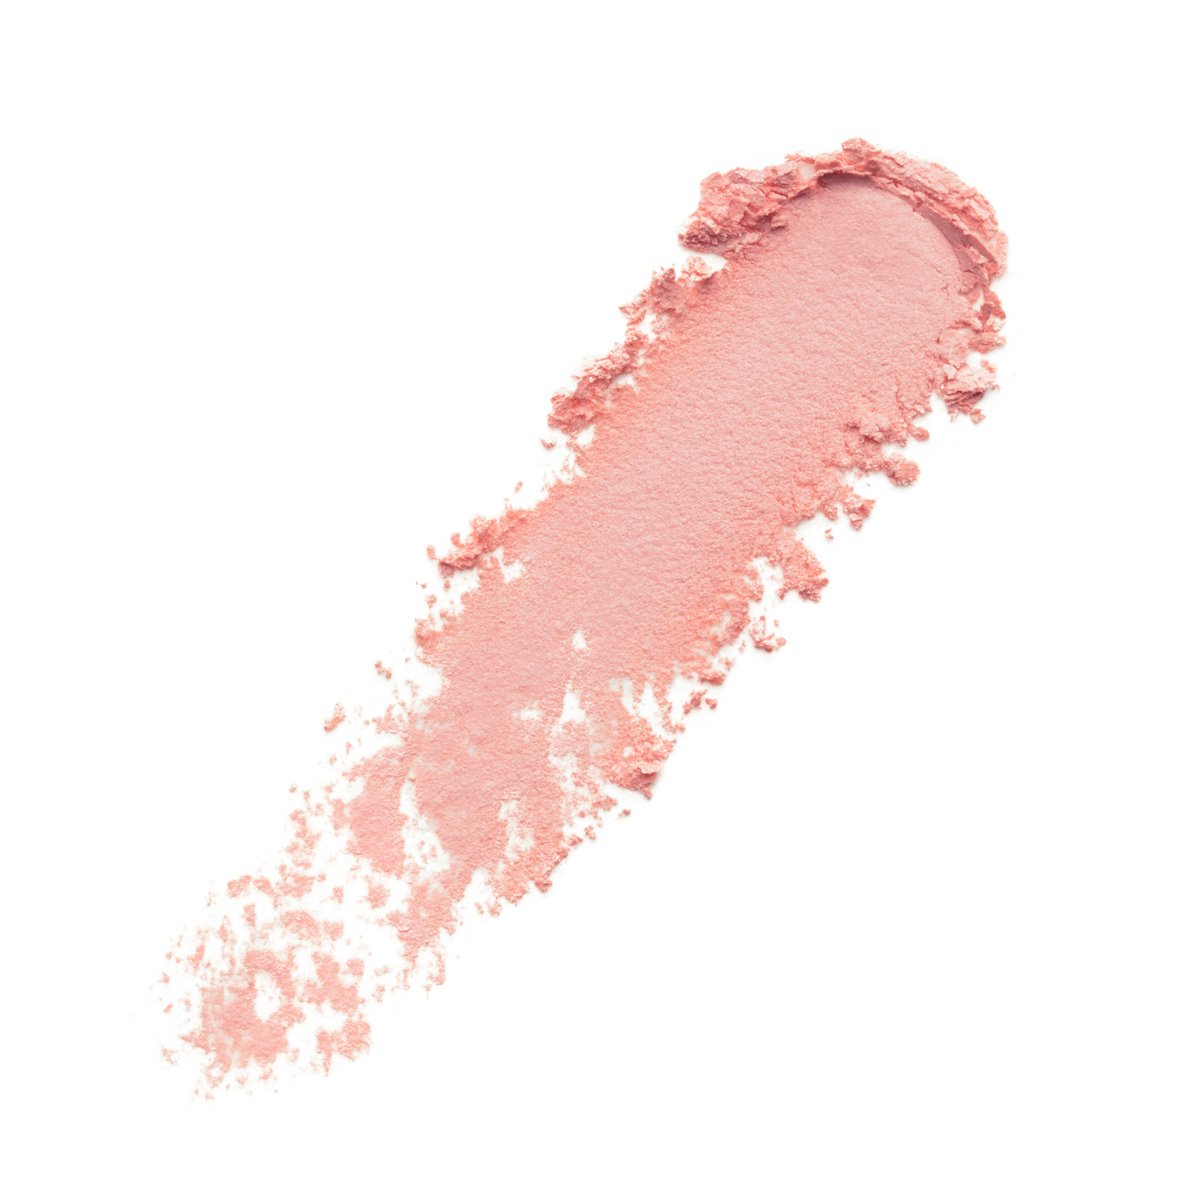 CHERUBIQUE - SATIN SHIMMER DUSTY ROSE - shimmer dusty rose blush